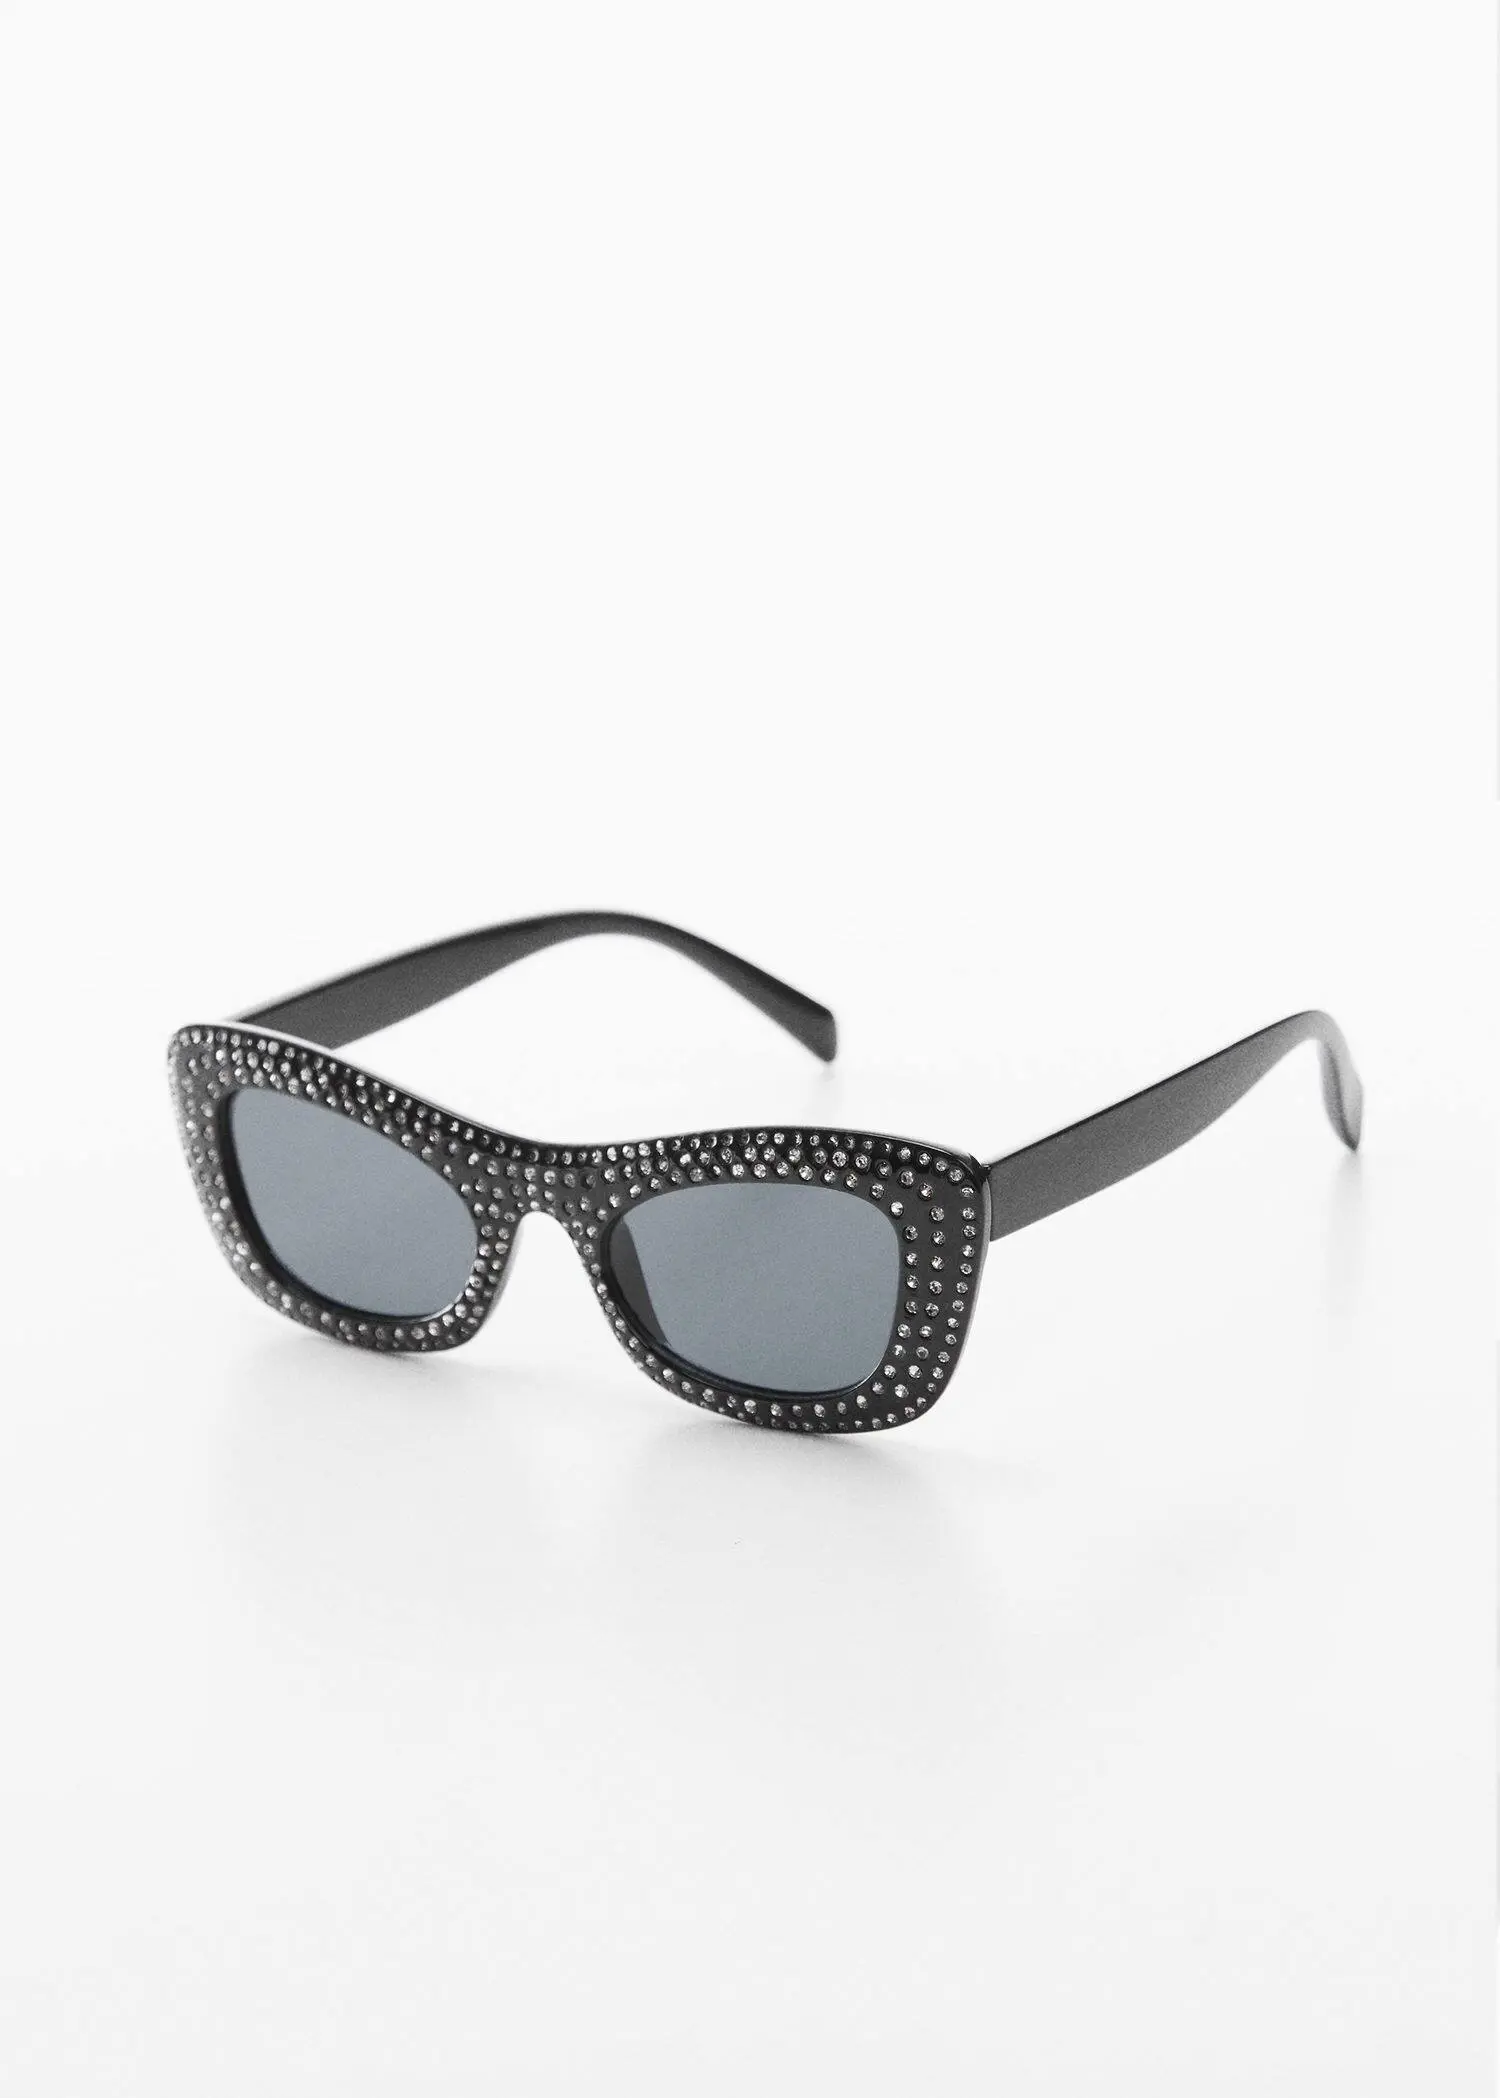 Mango Sunglasses with rhinestone detail. 3